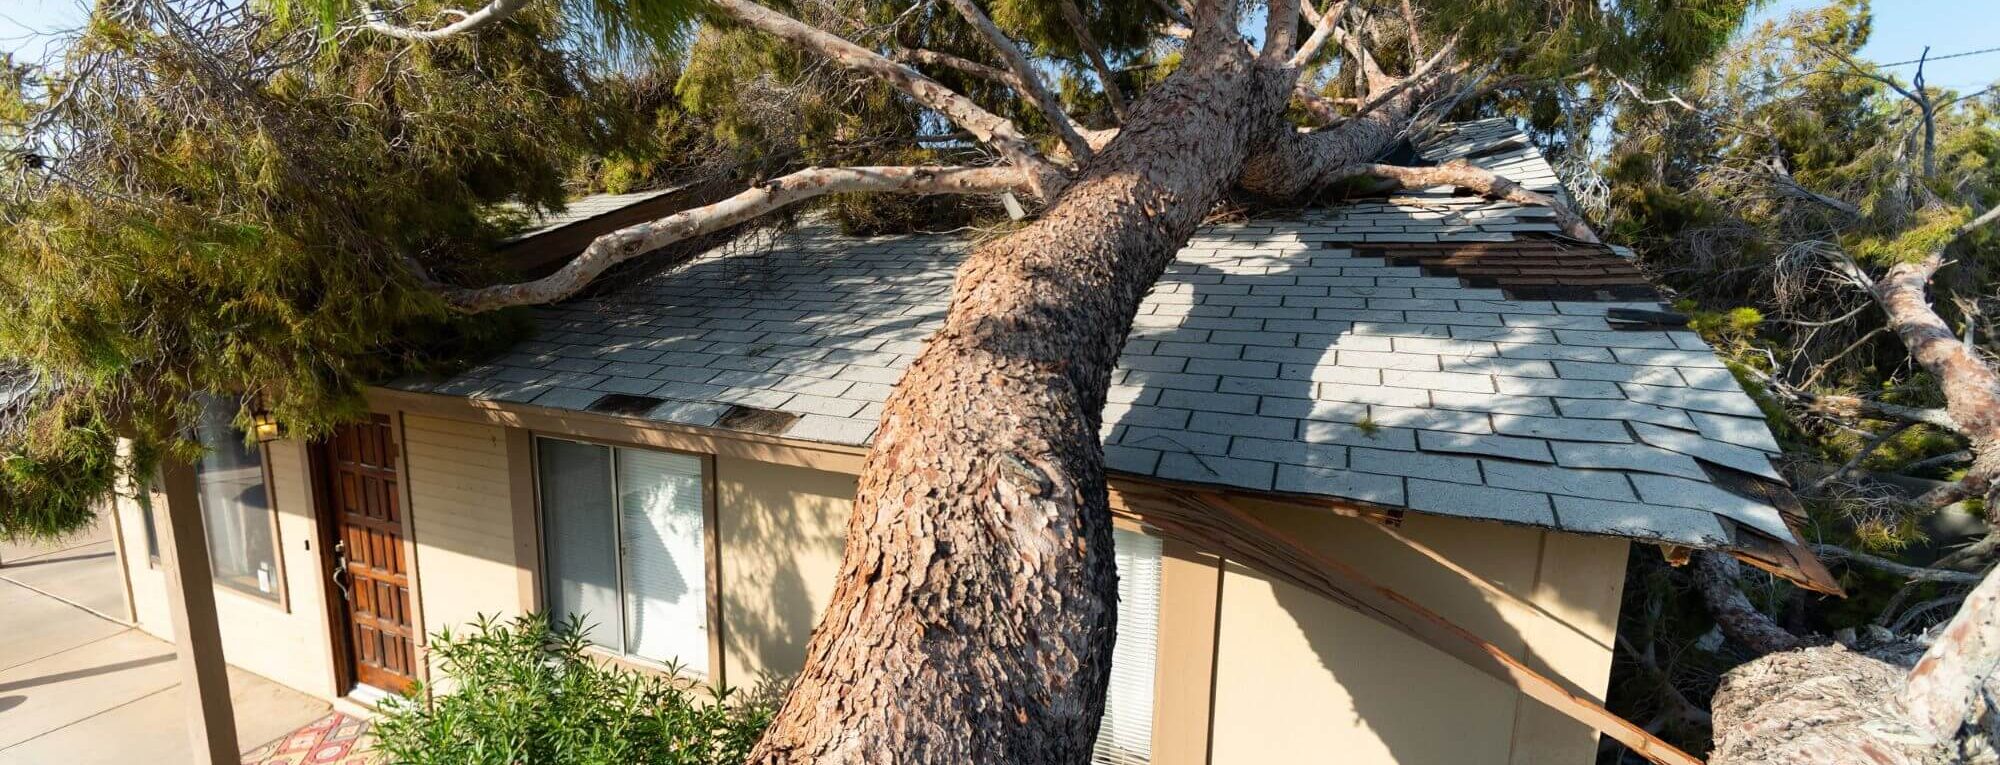 House damaged by falling tree